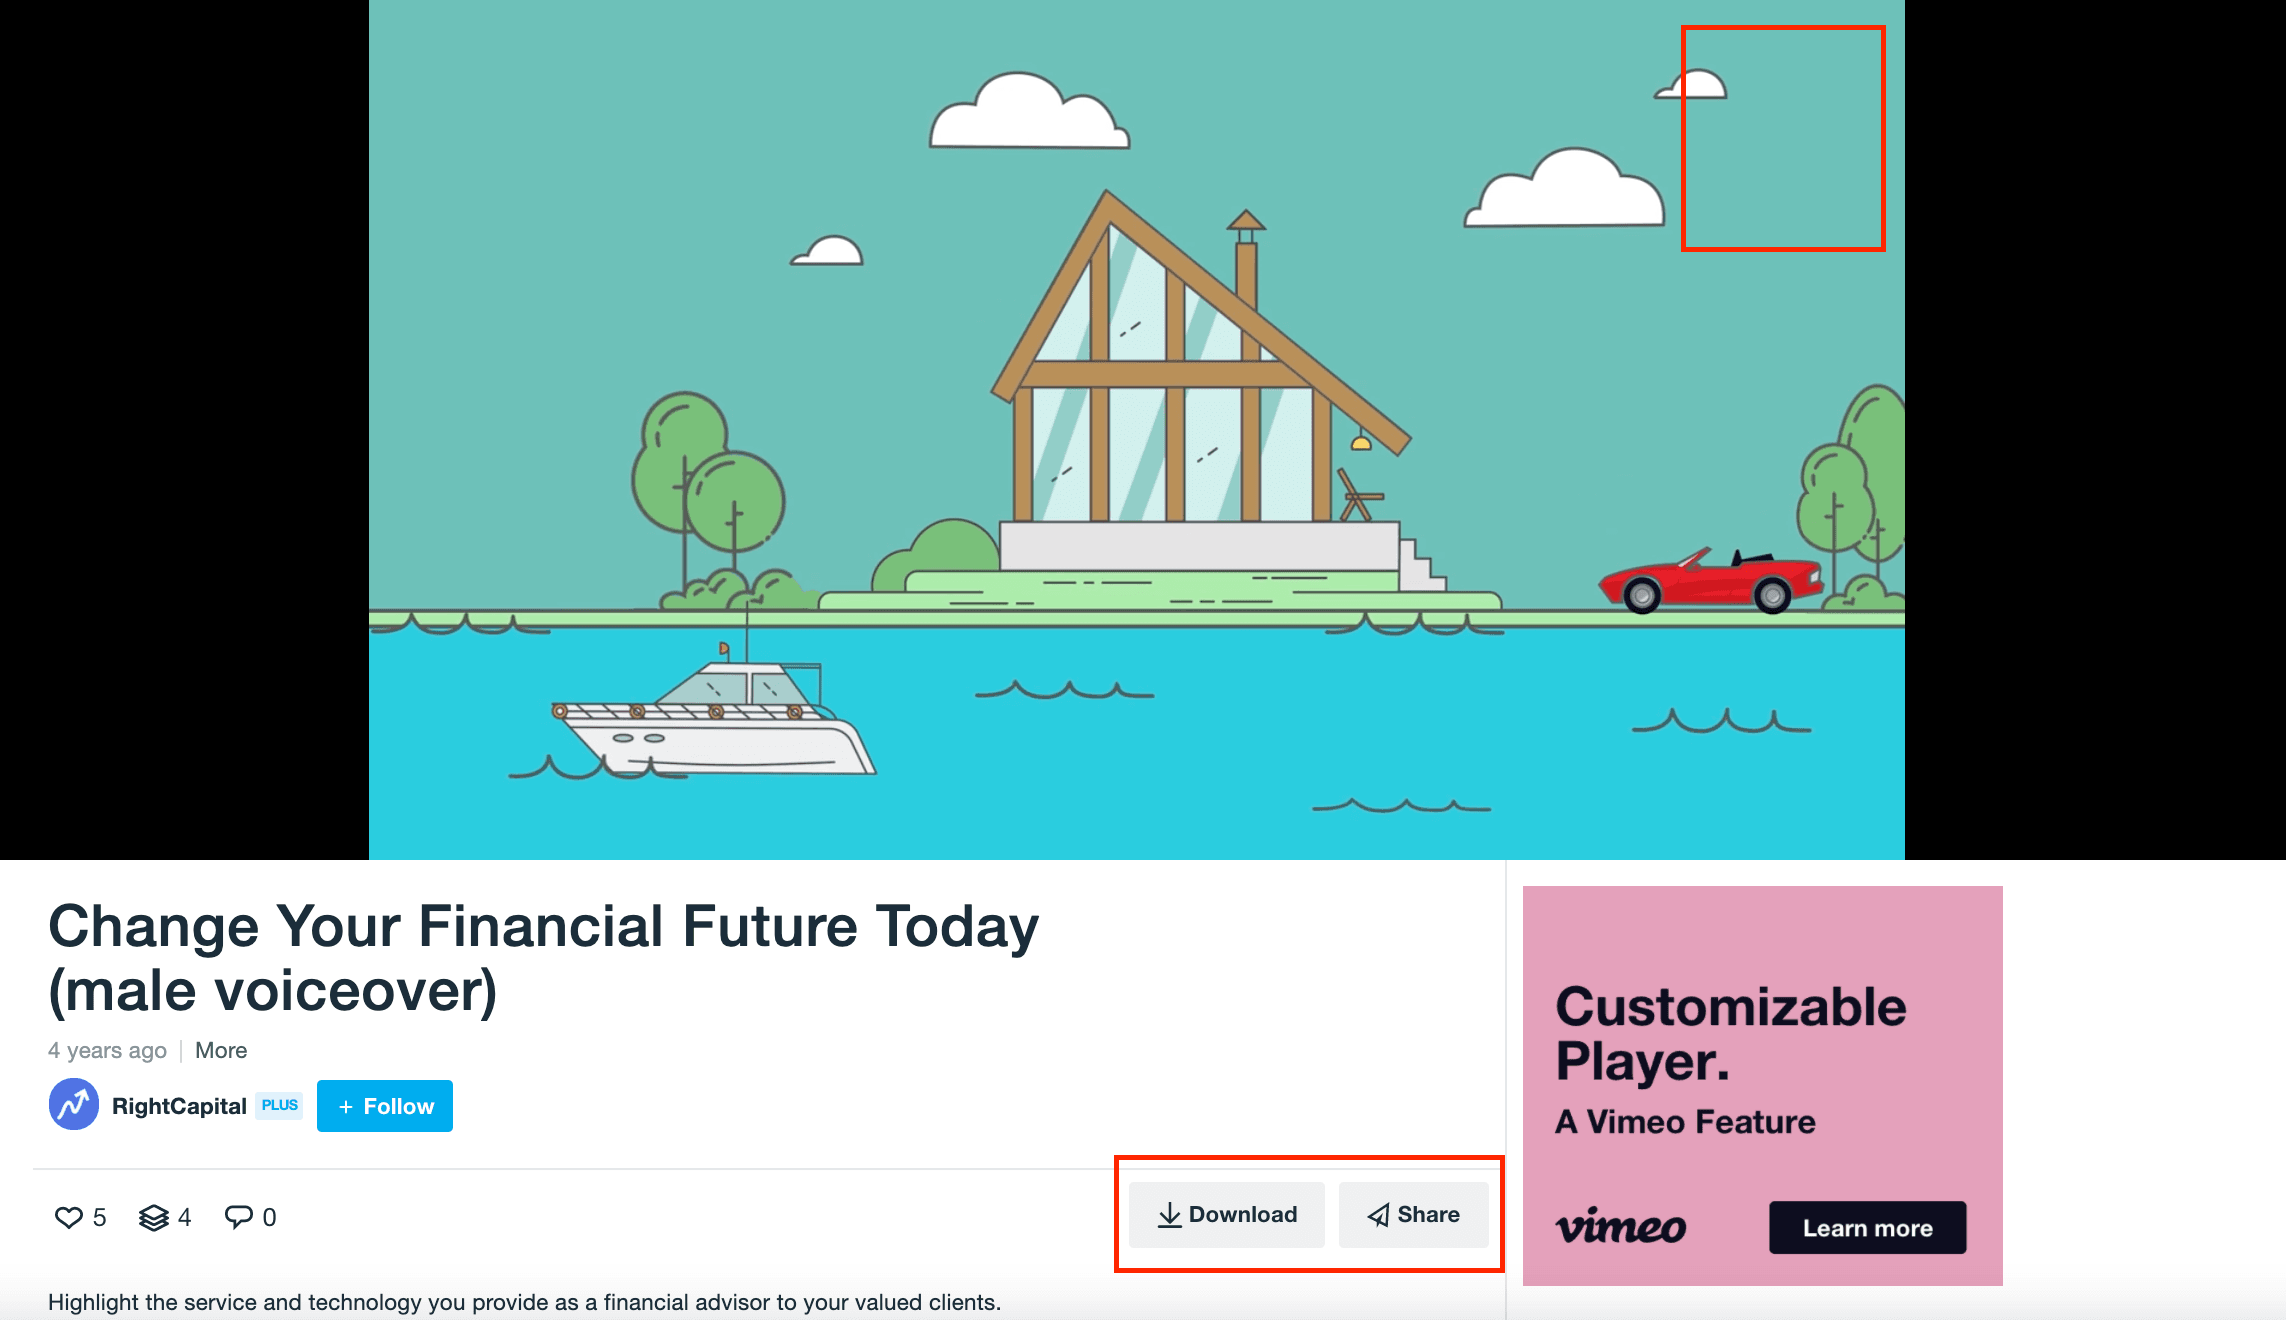 Screenshot of "Change Your Financial Future Today" in Vimeo